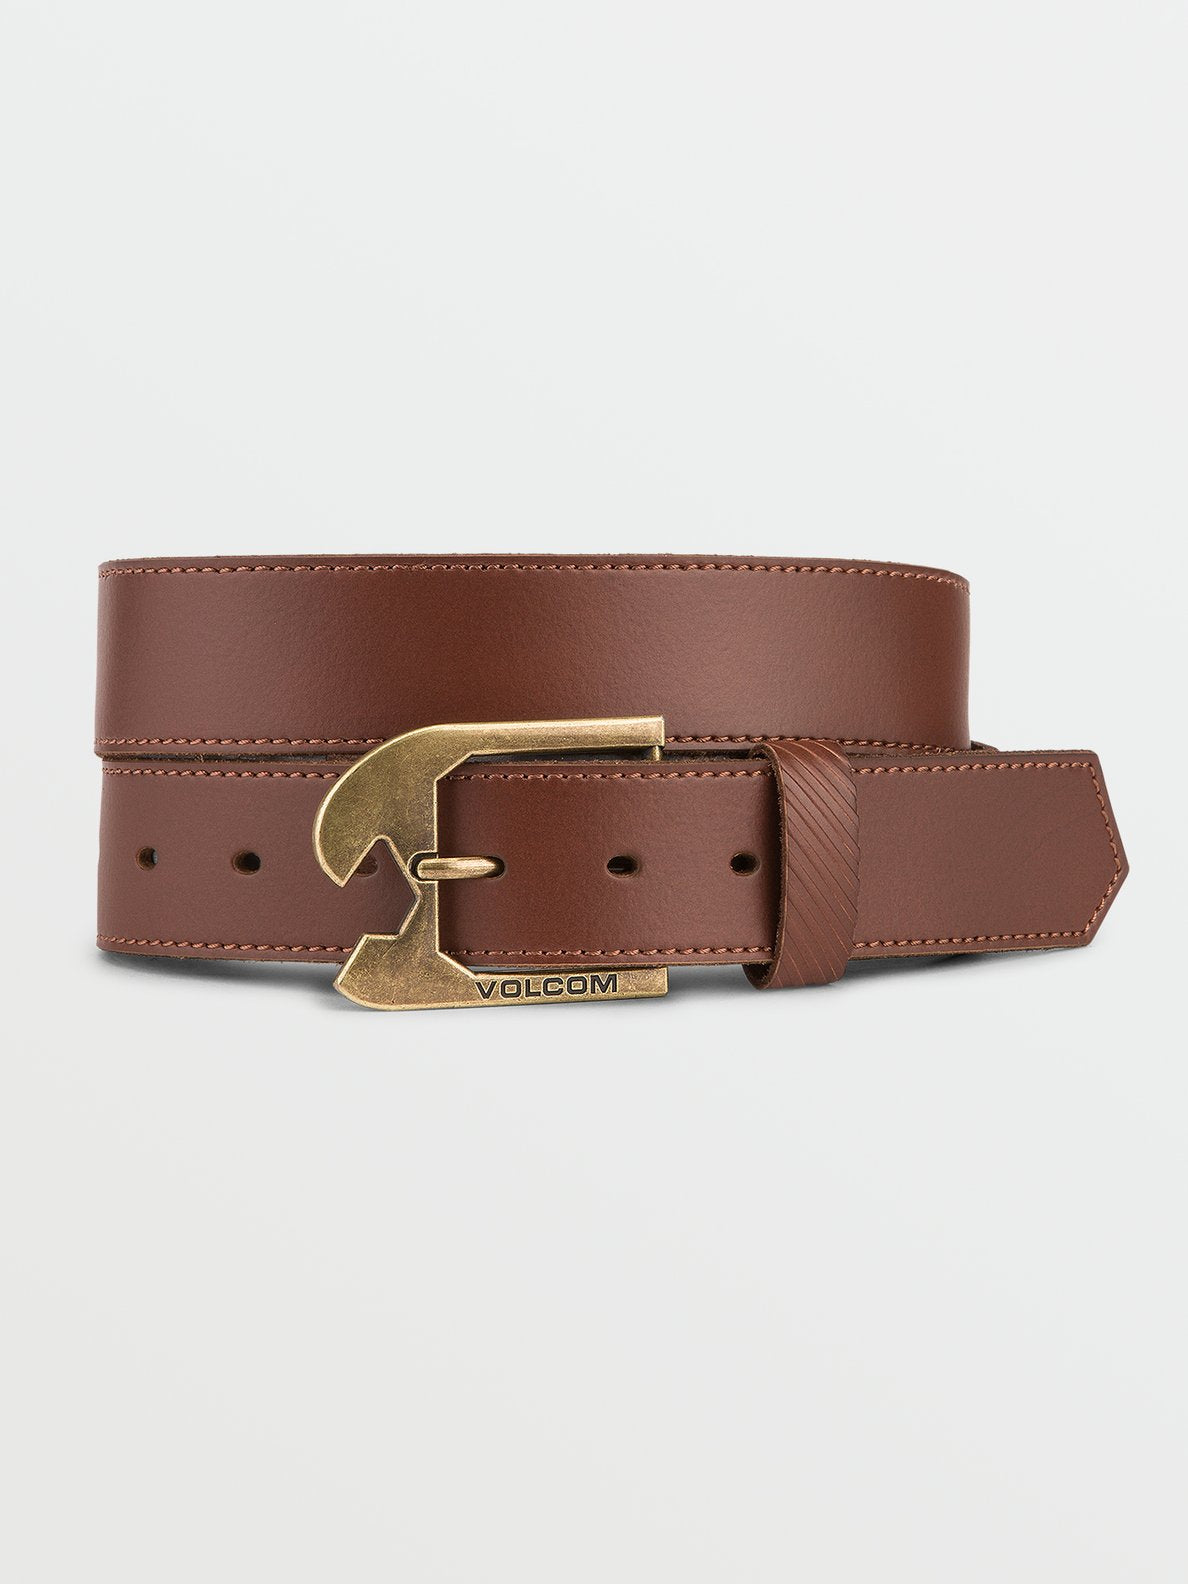 VOLCOM Skully Leather Belt - Brown